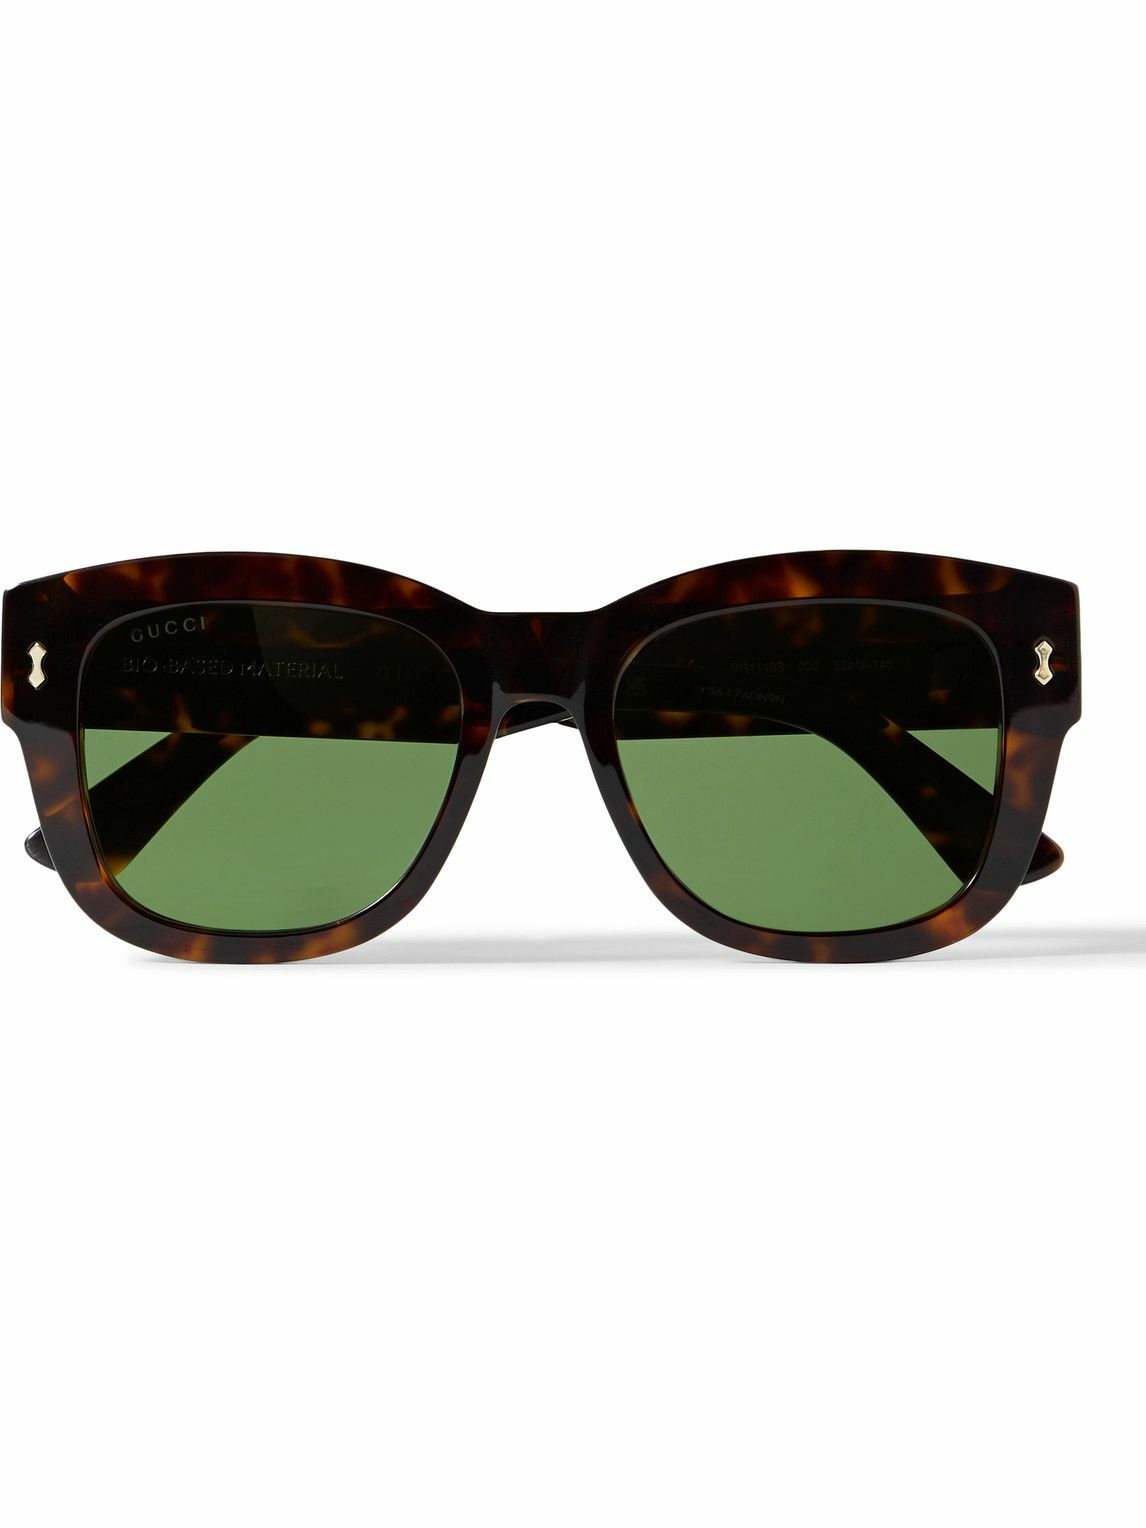 Gucci Eyewear - D-Frame Tortoiseshell Acetate Sunglasses Gucci